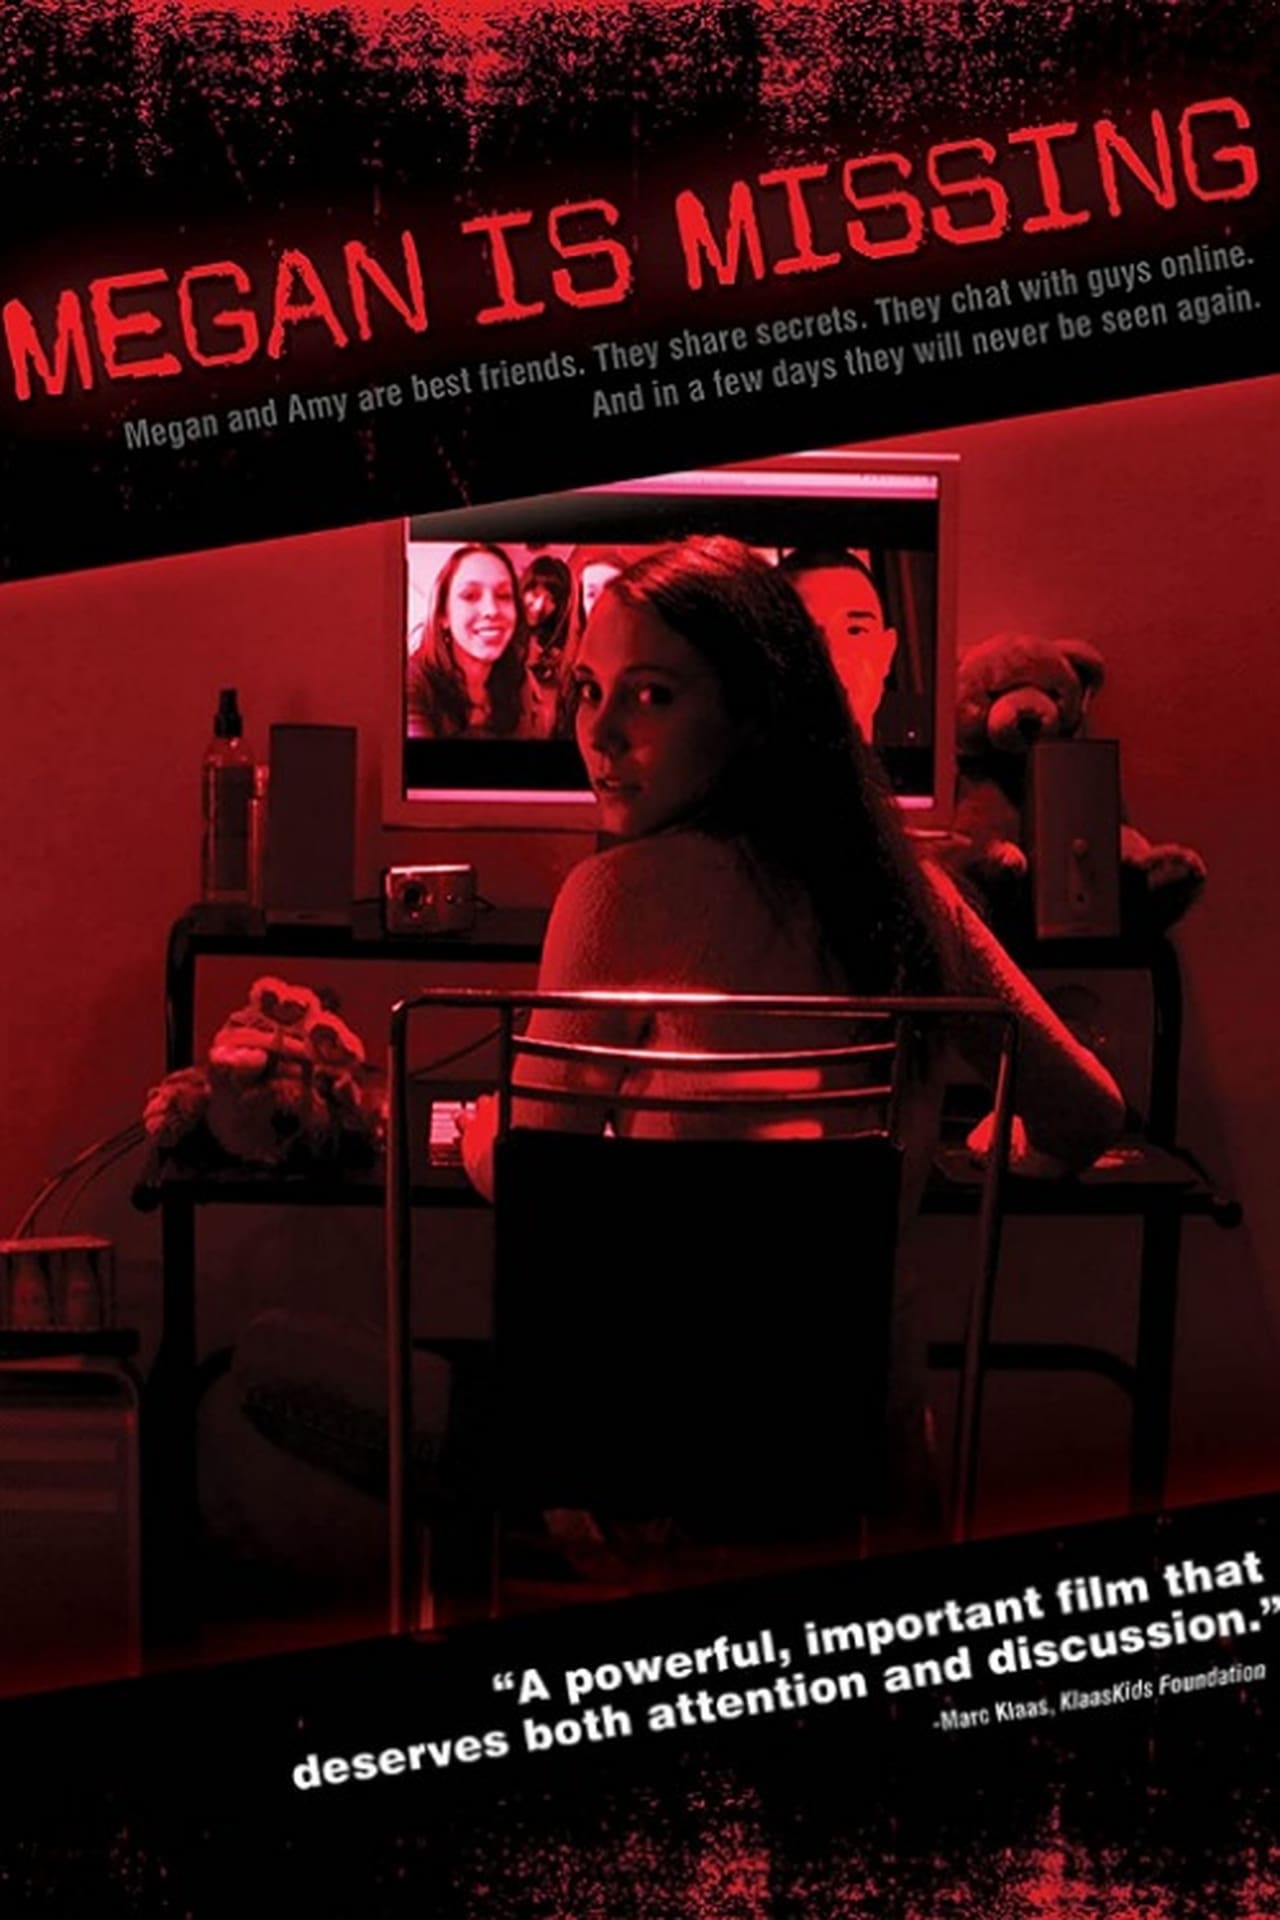 Megan Is Missing poster